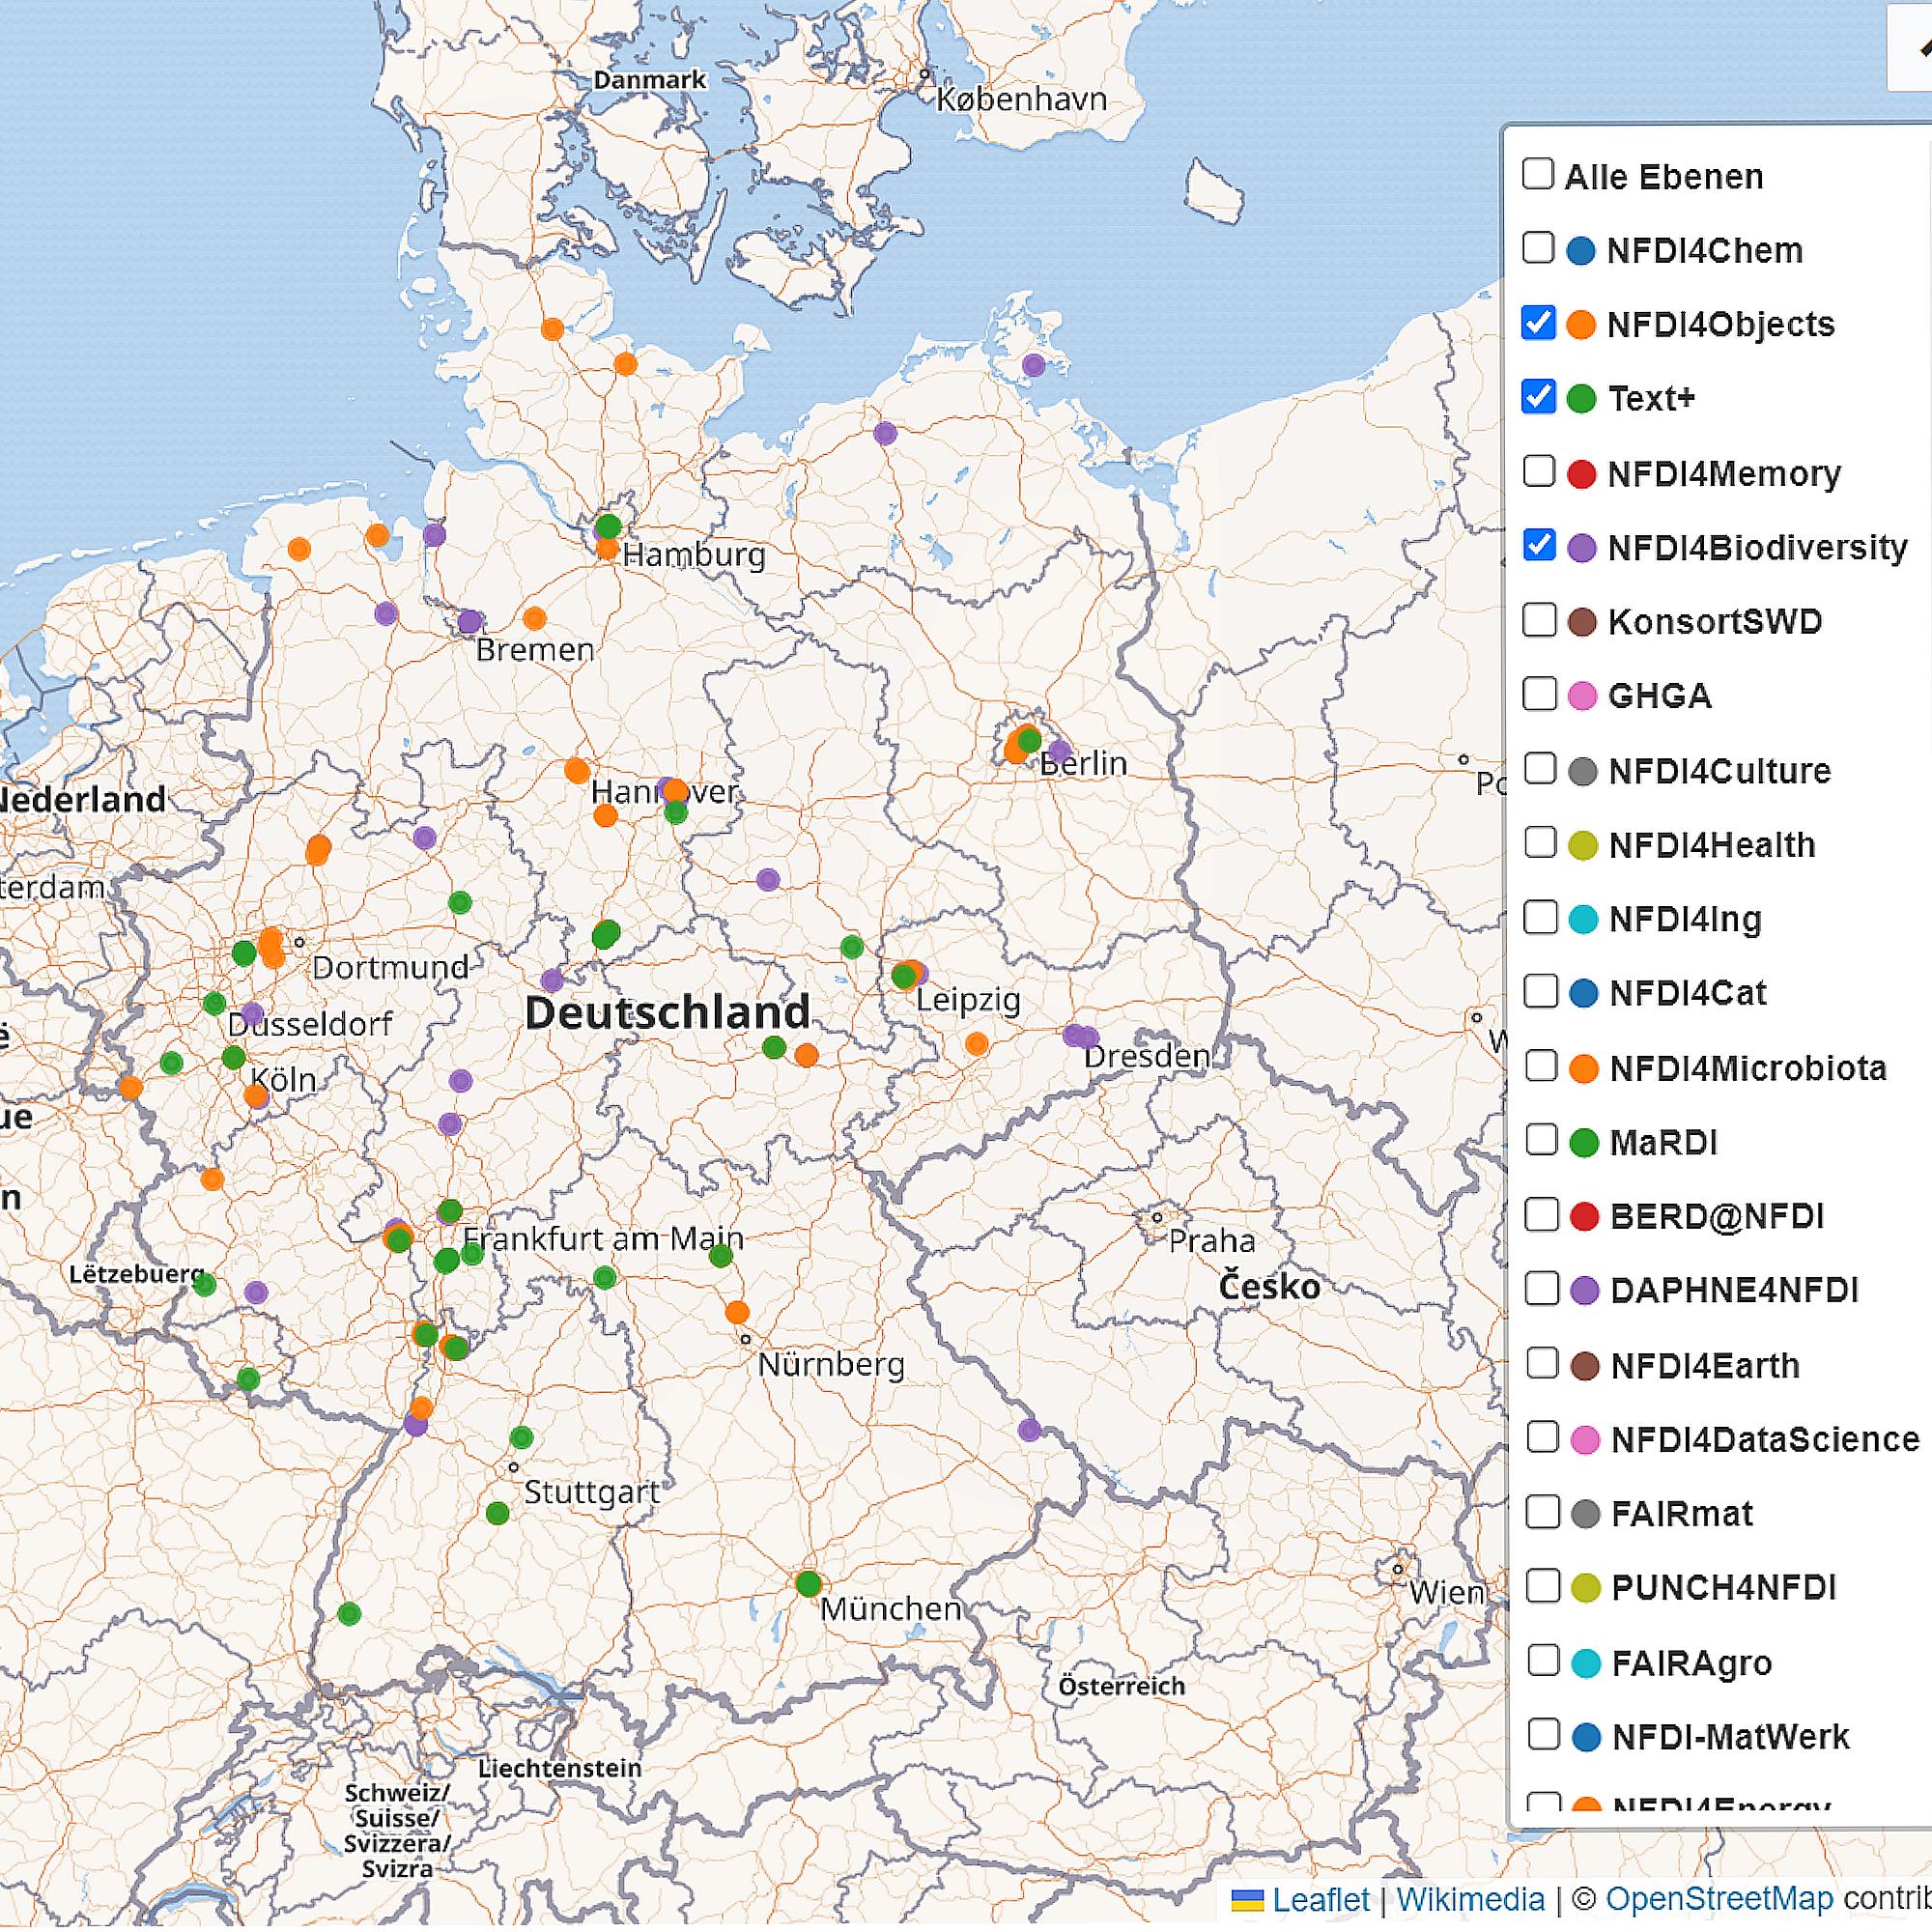 Map of NFDI Consortia in Germany